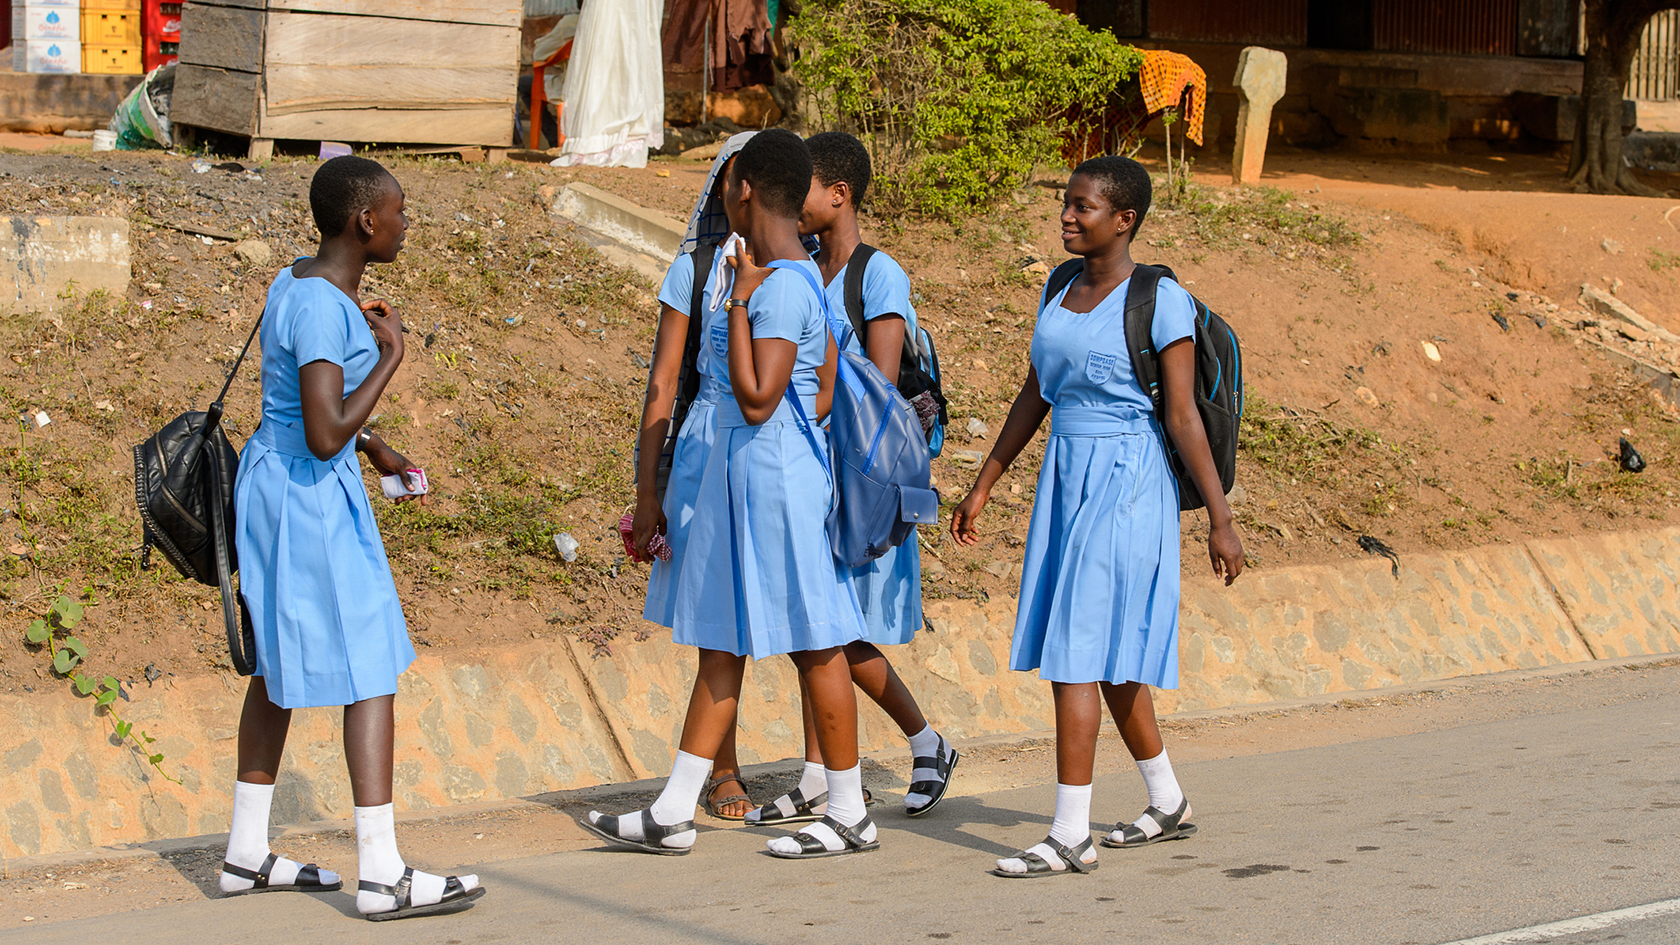 Ghanaian schoolgirls on their way to school.